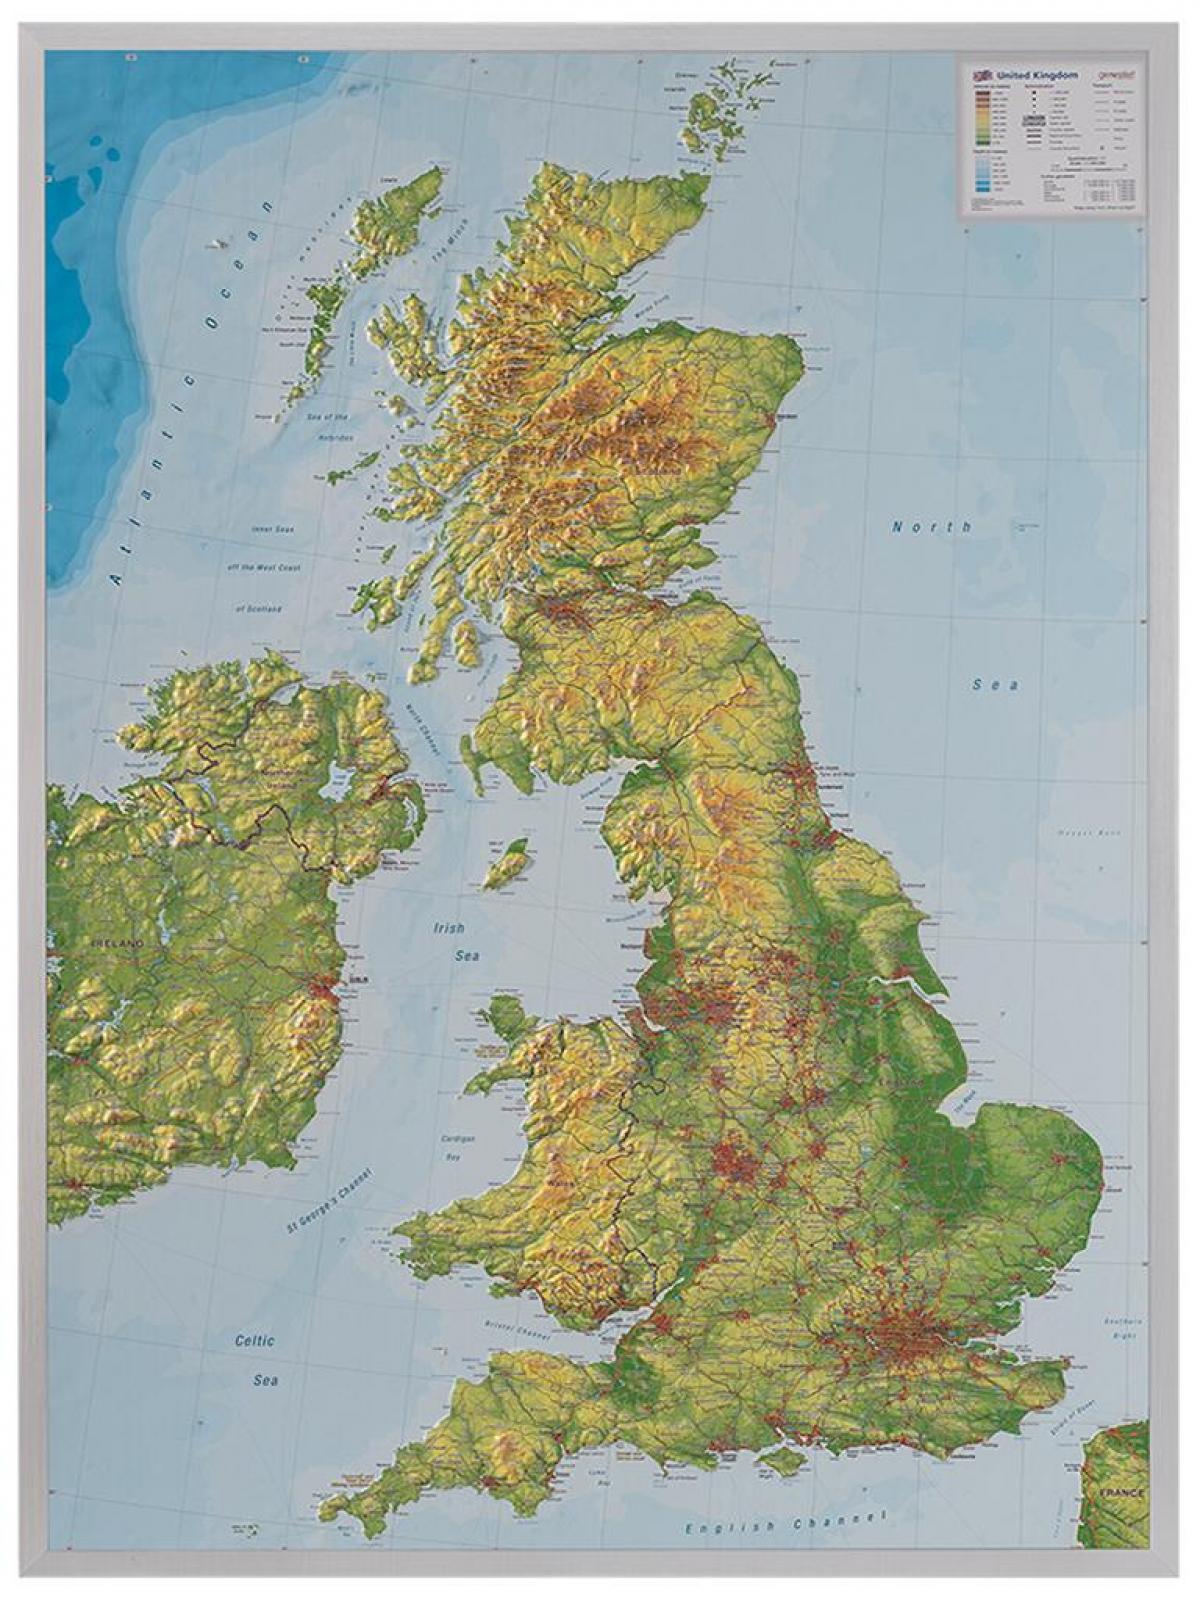 United Kingdom - Topographic • Map • PopulationData.net